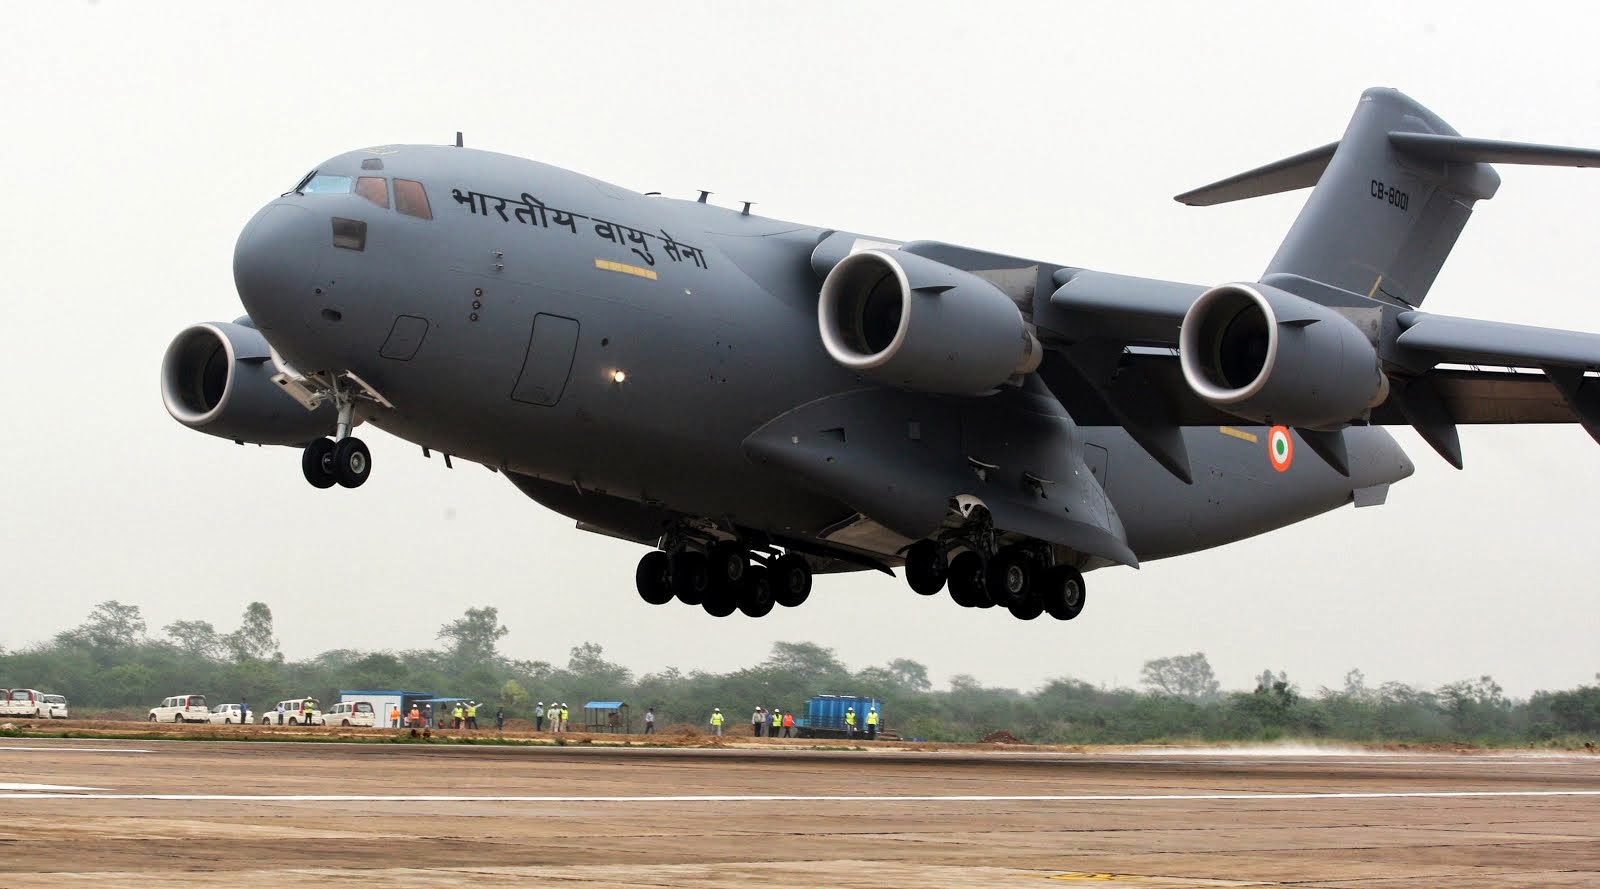 http://3.bp.blogspot.com/-f-9P5Ff38pI/UcMupOWzYZI/AAAAAAAAanU/oFmR6BcfN8Y/s1600/Indian+Air+Force+Receives+C-17+Globemaster+III+Strategic+Airlifter+transport+aircraft+military+%25286%2529.JPG